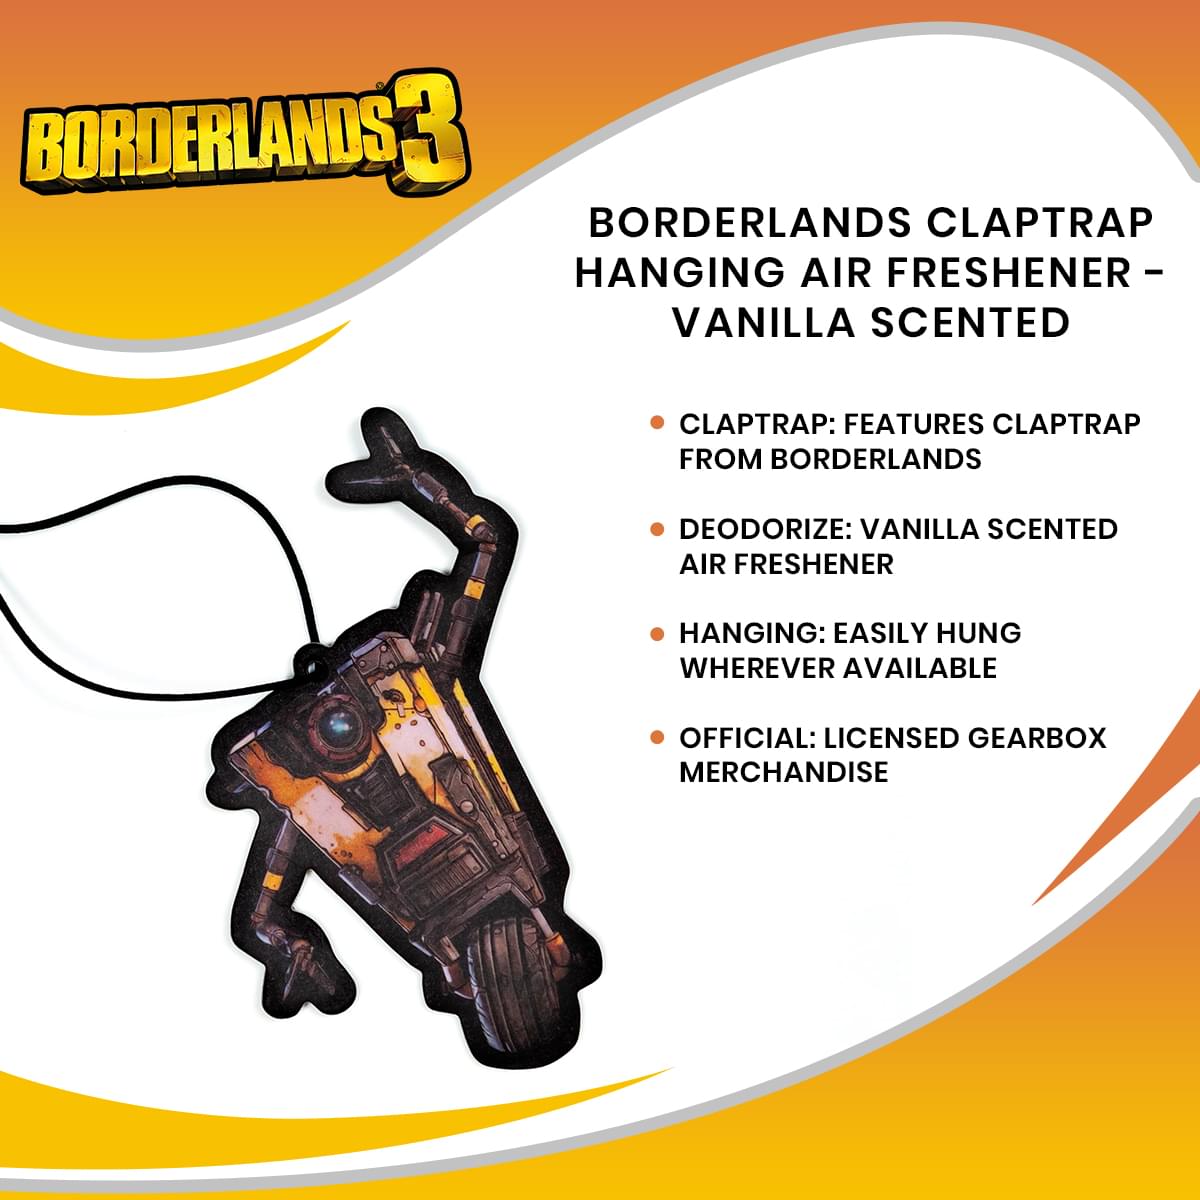 Borderlands Claptrap Hanging Air Freshener - Vanilla Scented